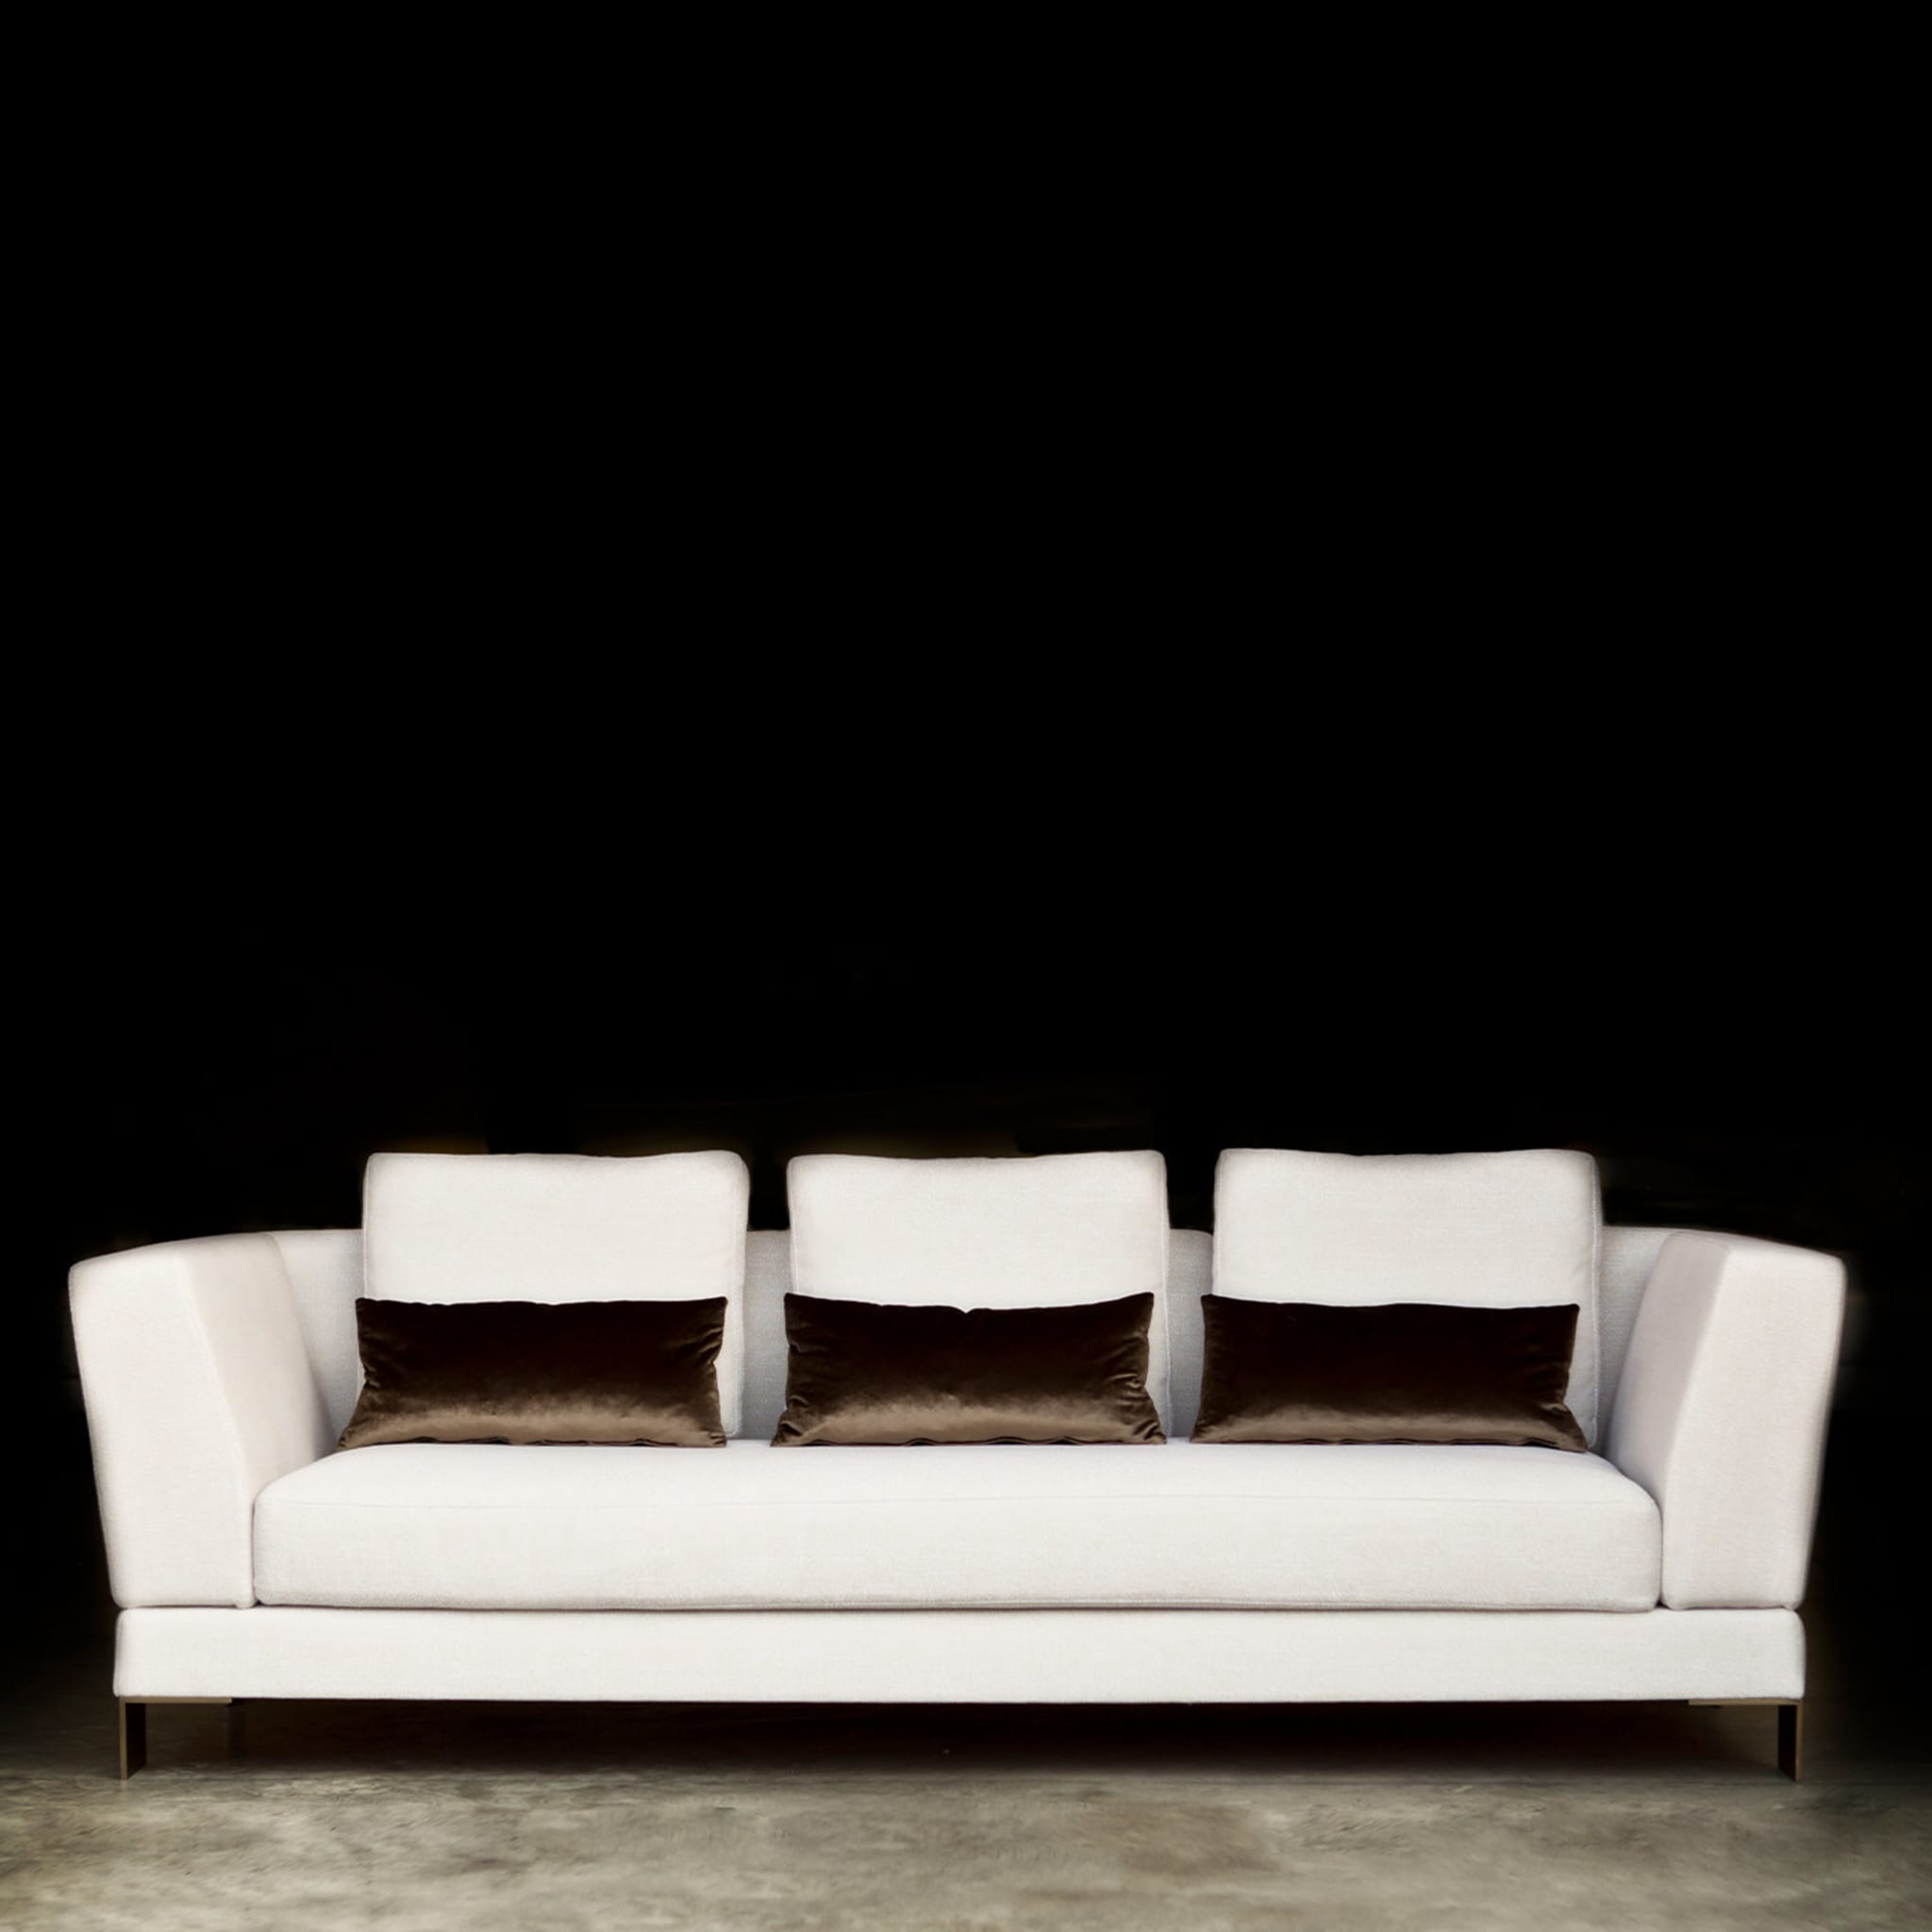 Aquabella White Sofa by Bosco Fair - Alternative view 3